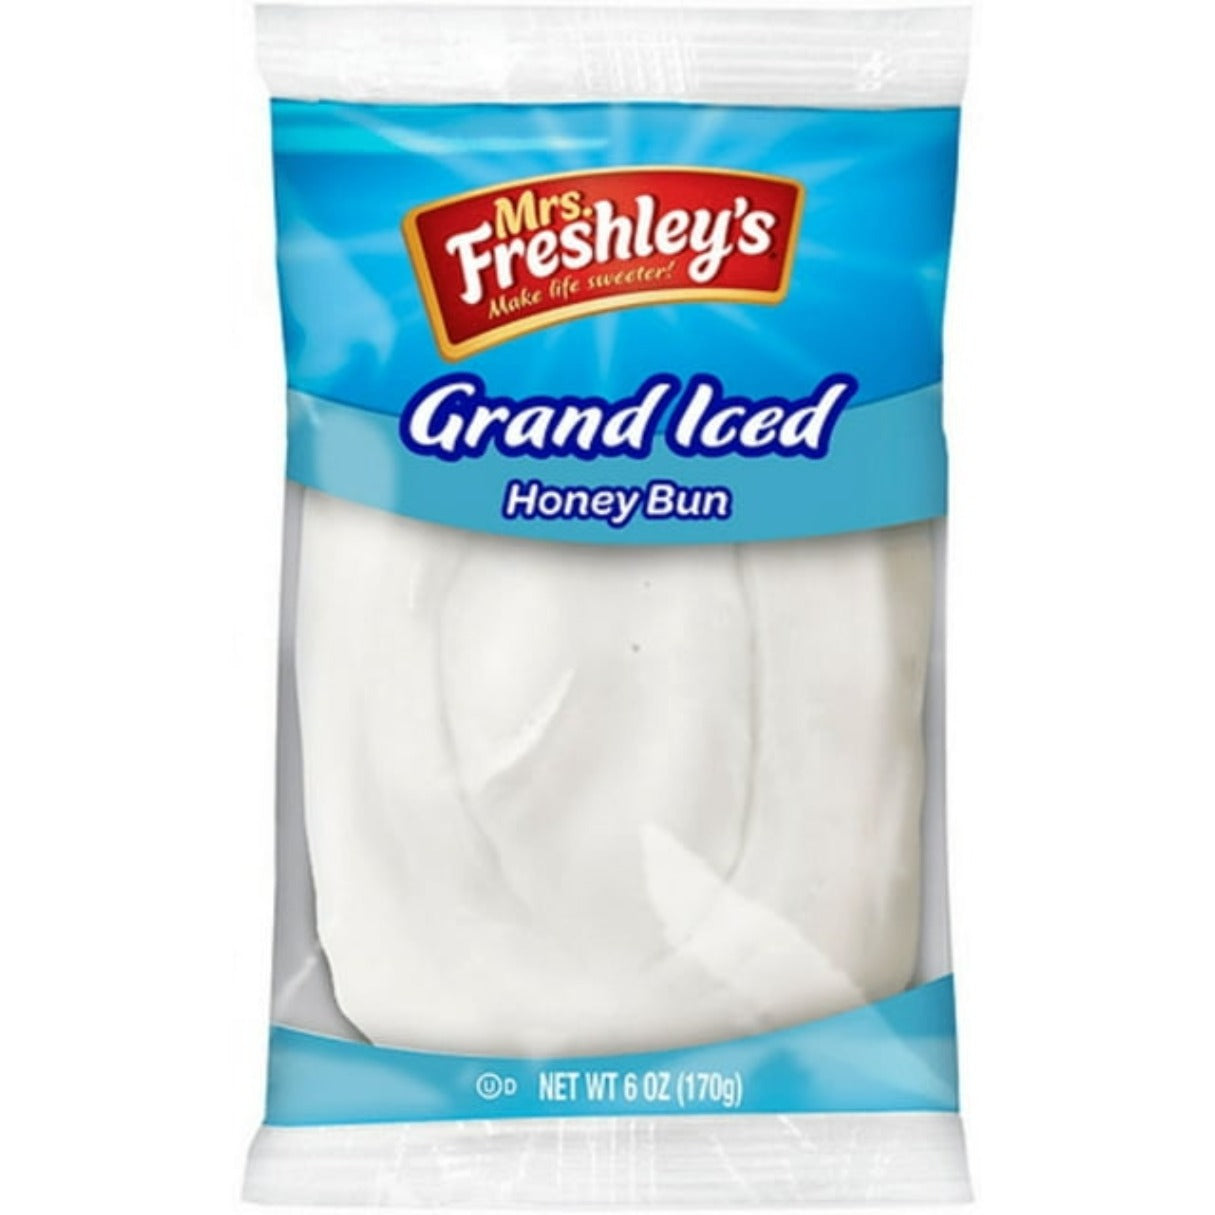 Mrs. Freshley's Grand White Iced Honey Buns 6oz - 6ct